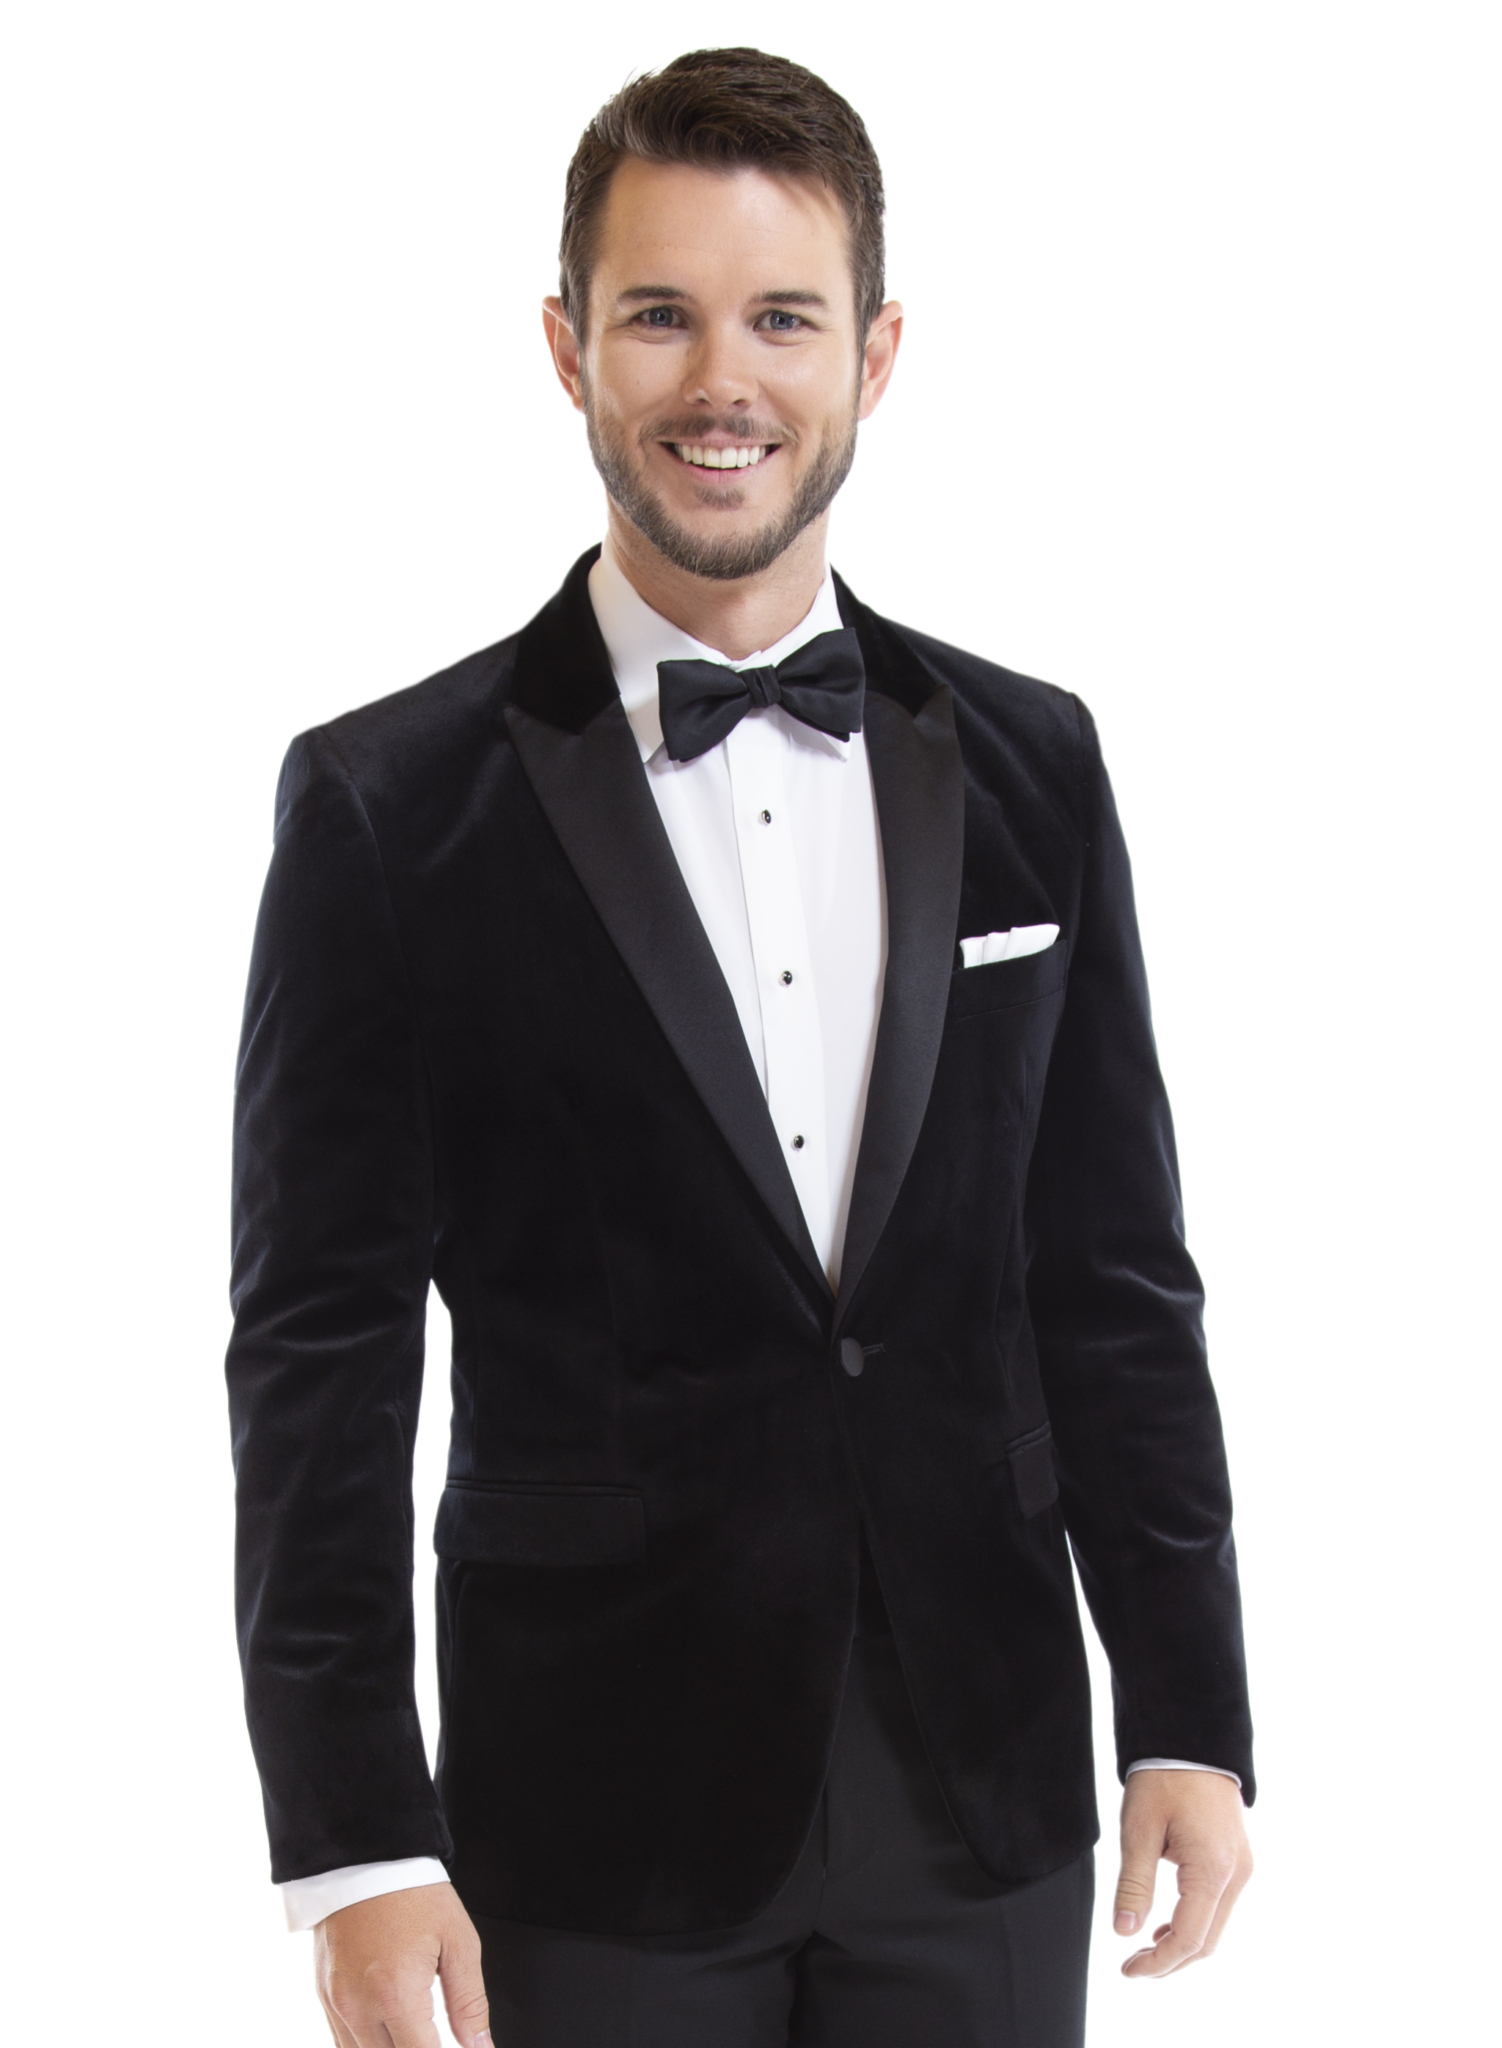 Velvet wedding suit - Anthony Formal Wear - Anthony Formal Wear